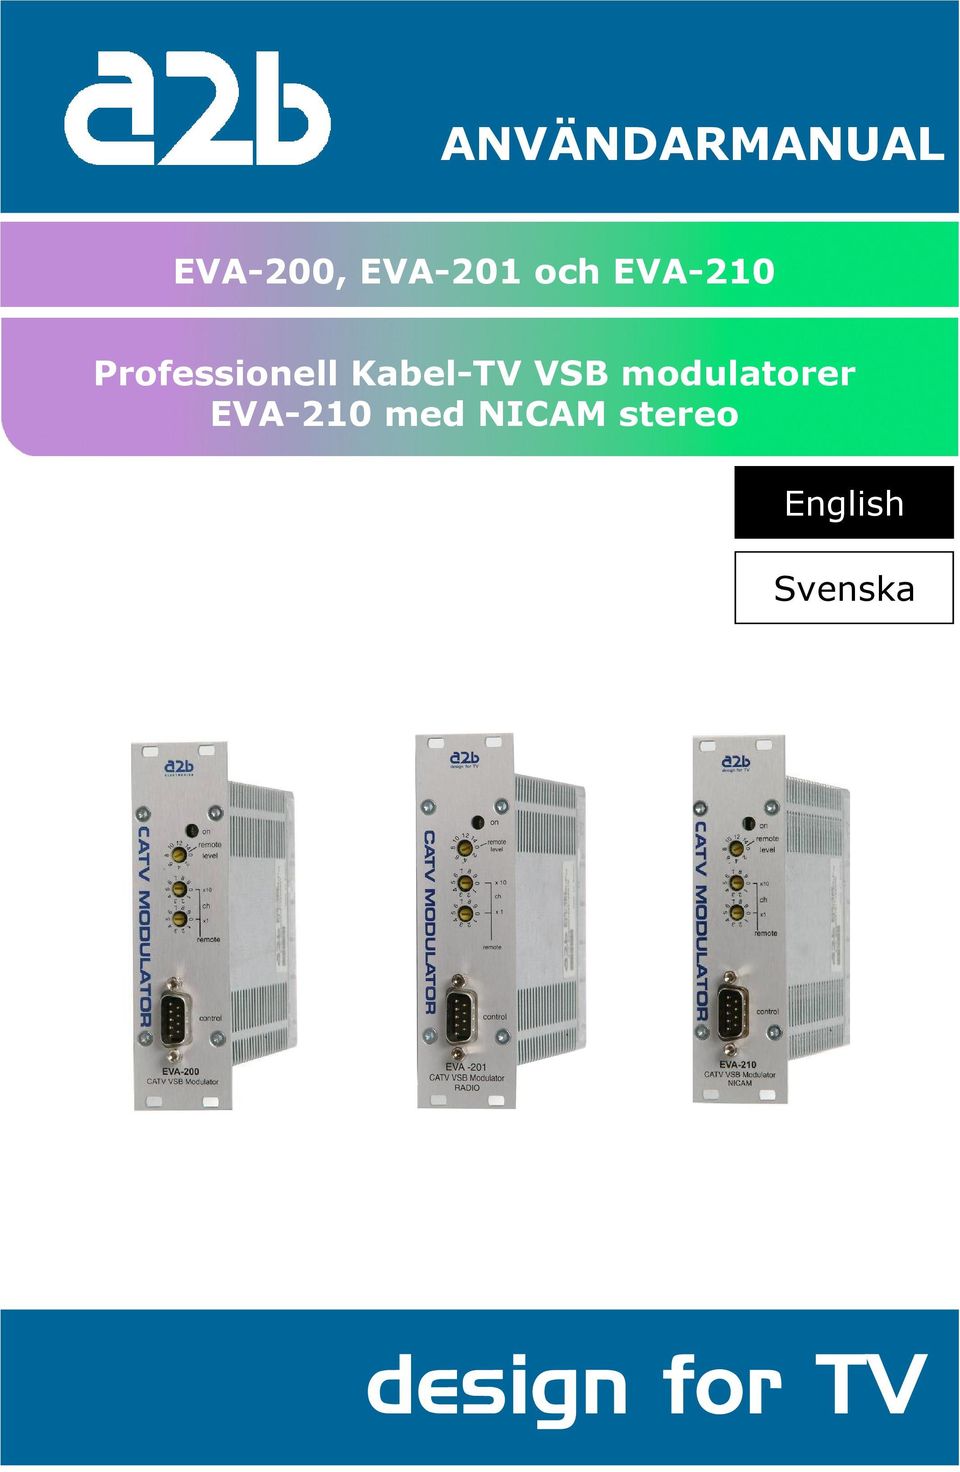 VSB modulatorer EVA-210 med NICAM